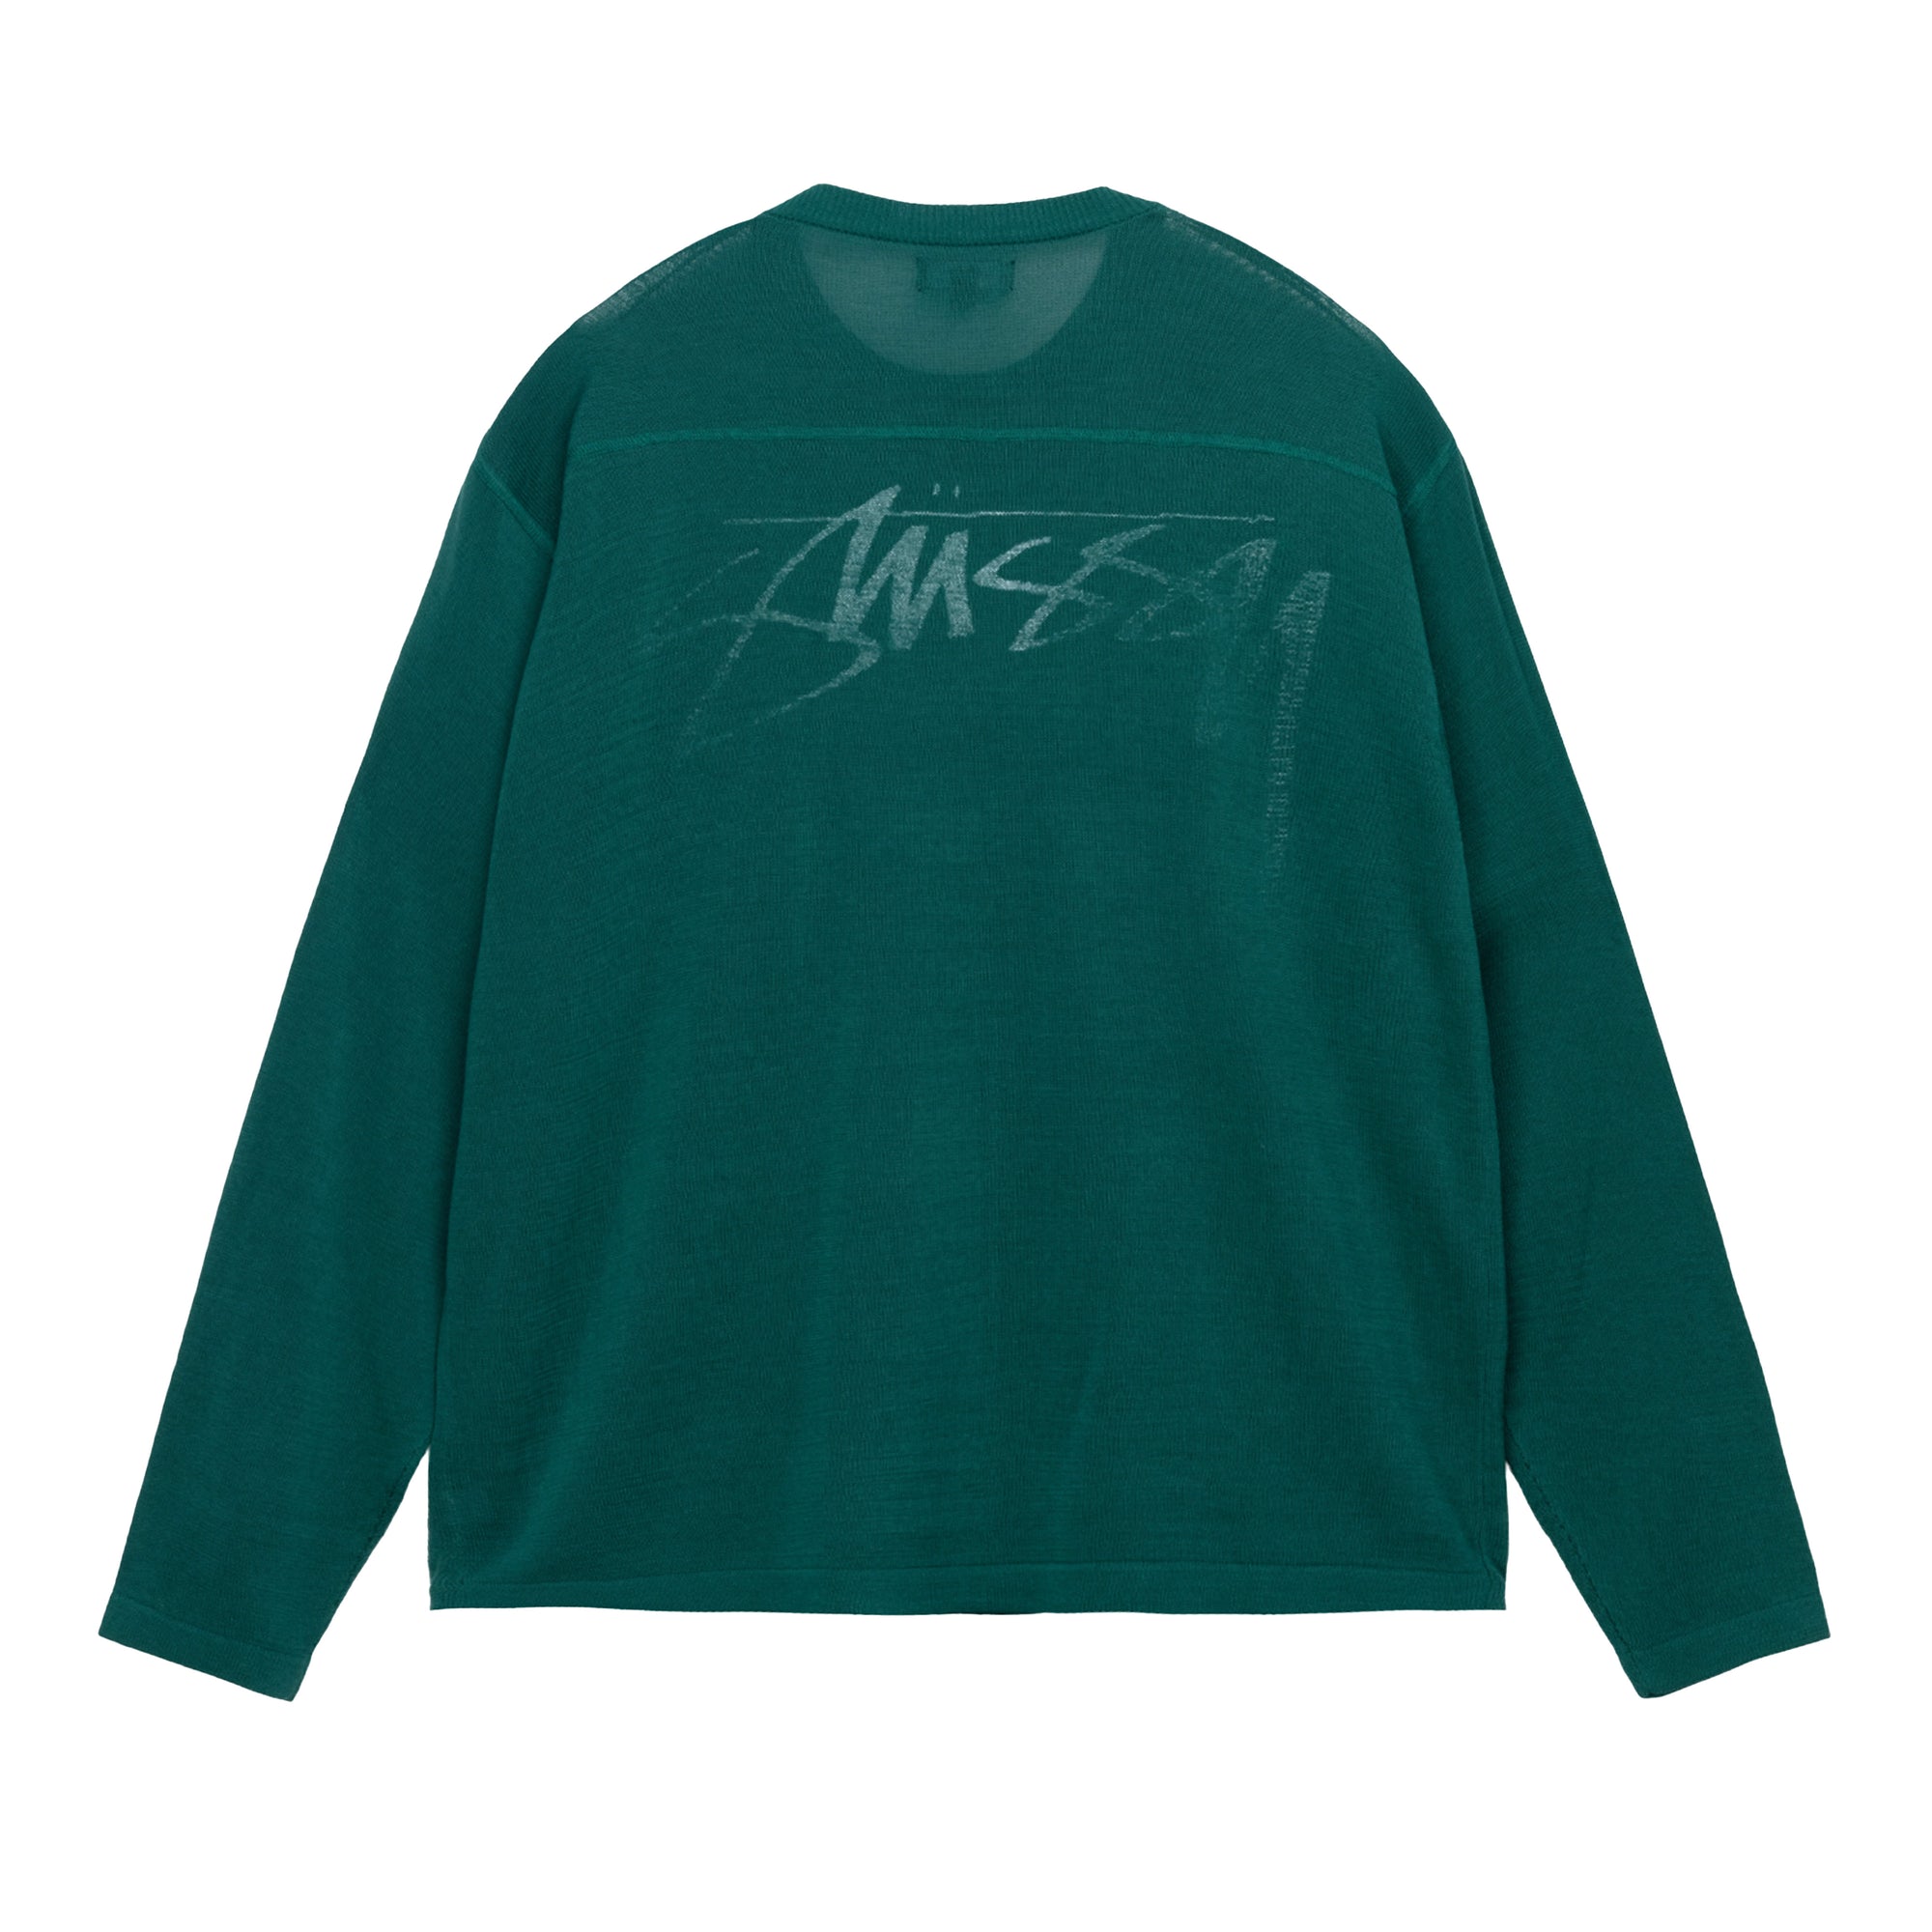 Stüssy - Football Sweater - (Green) view 2